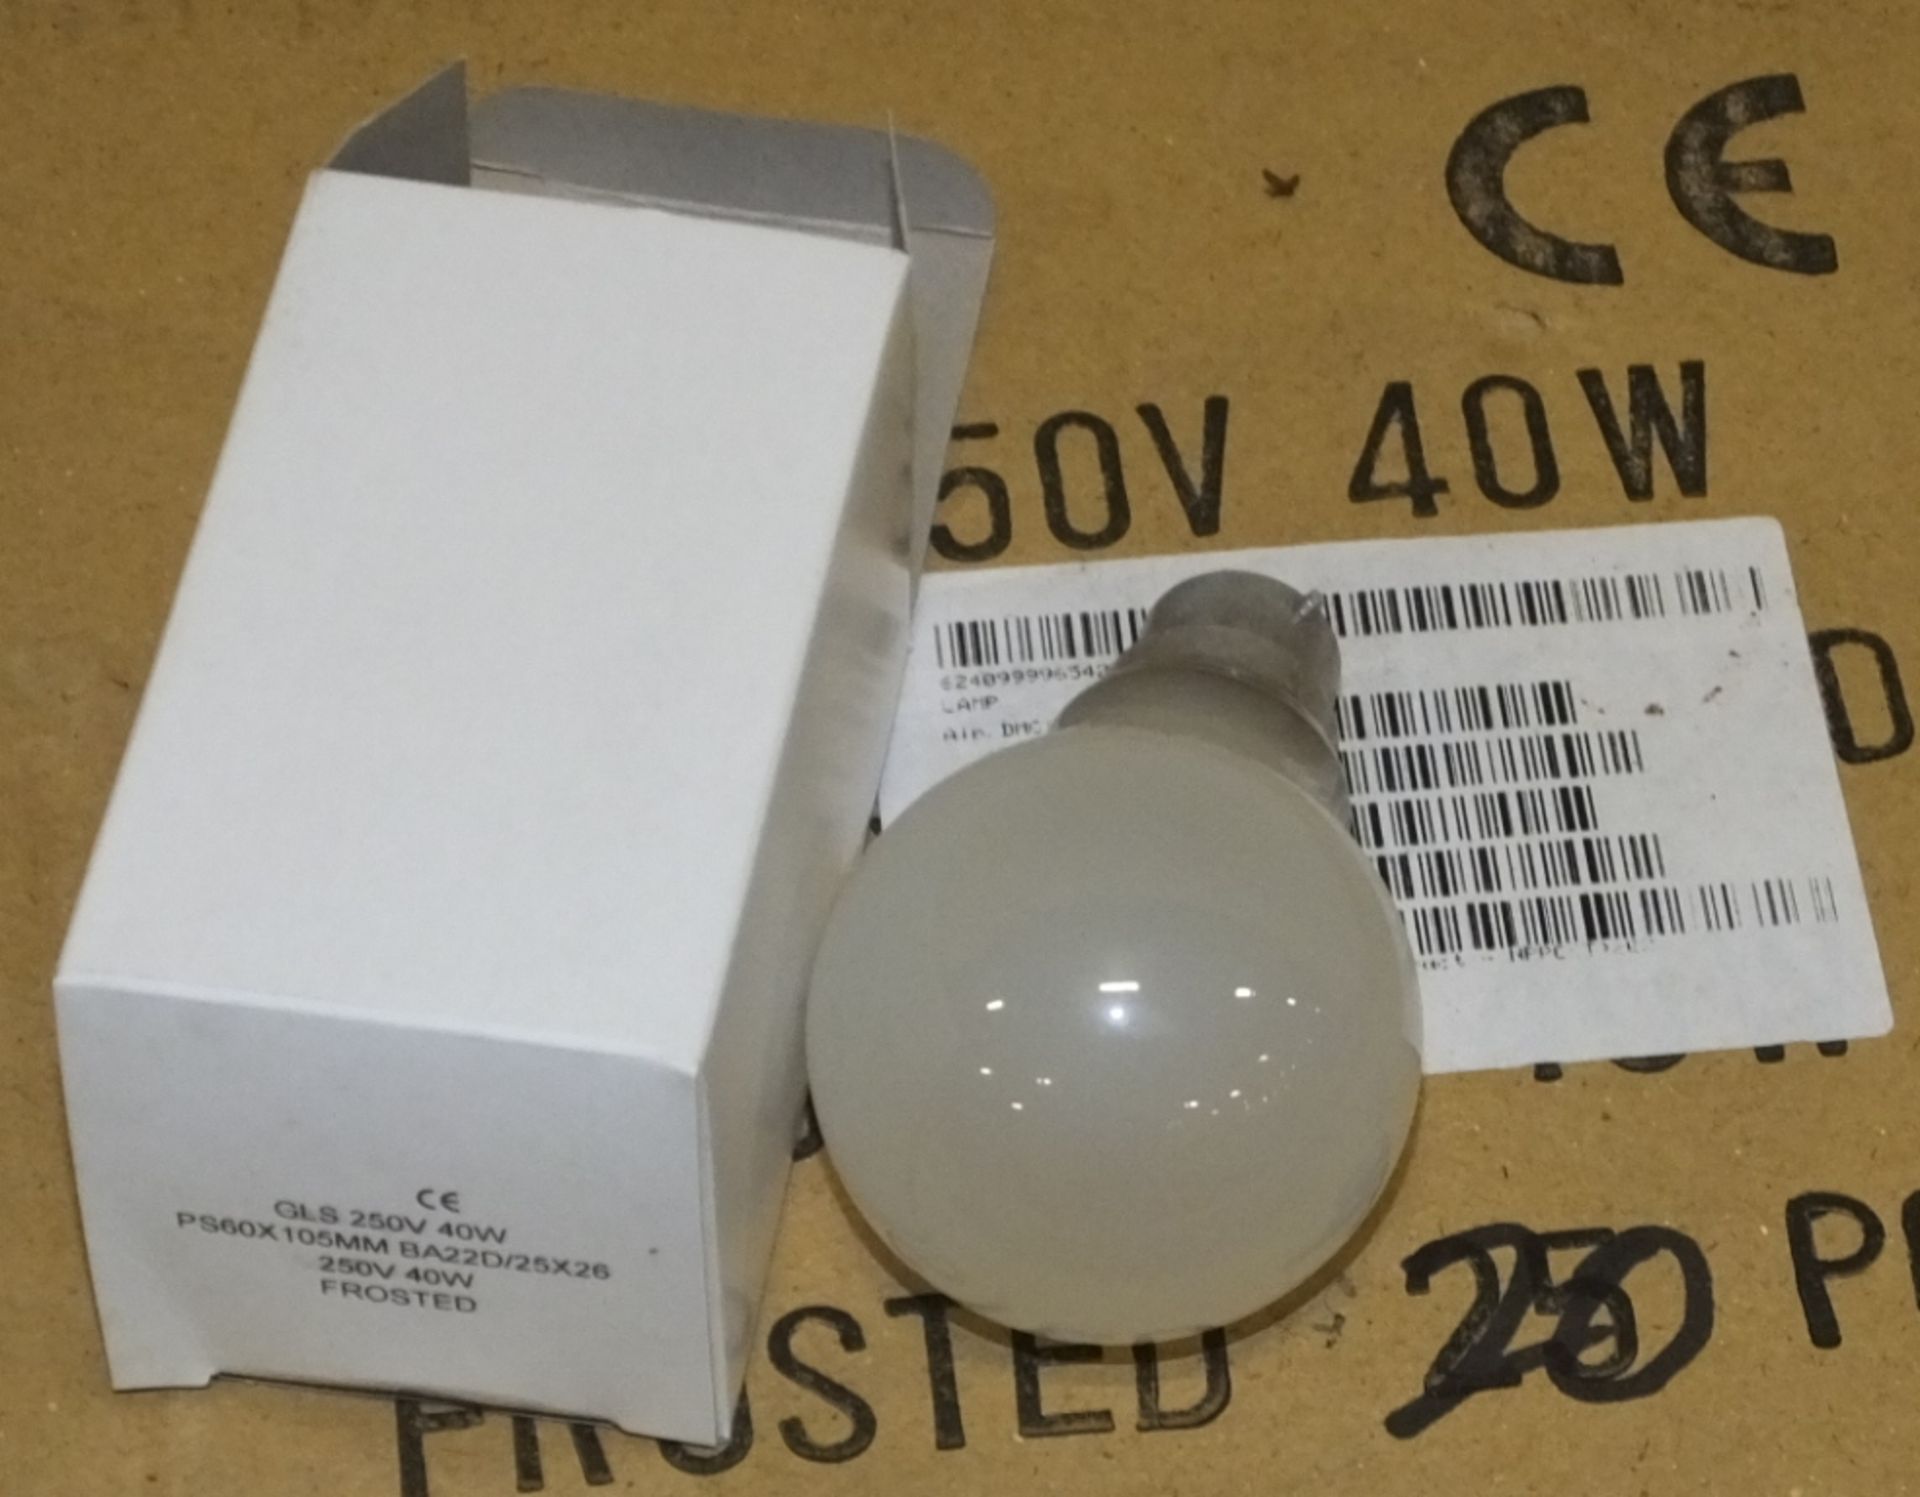 300x 40W BC Light bulbs - Image 2 of 2